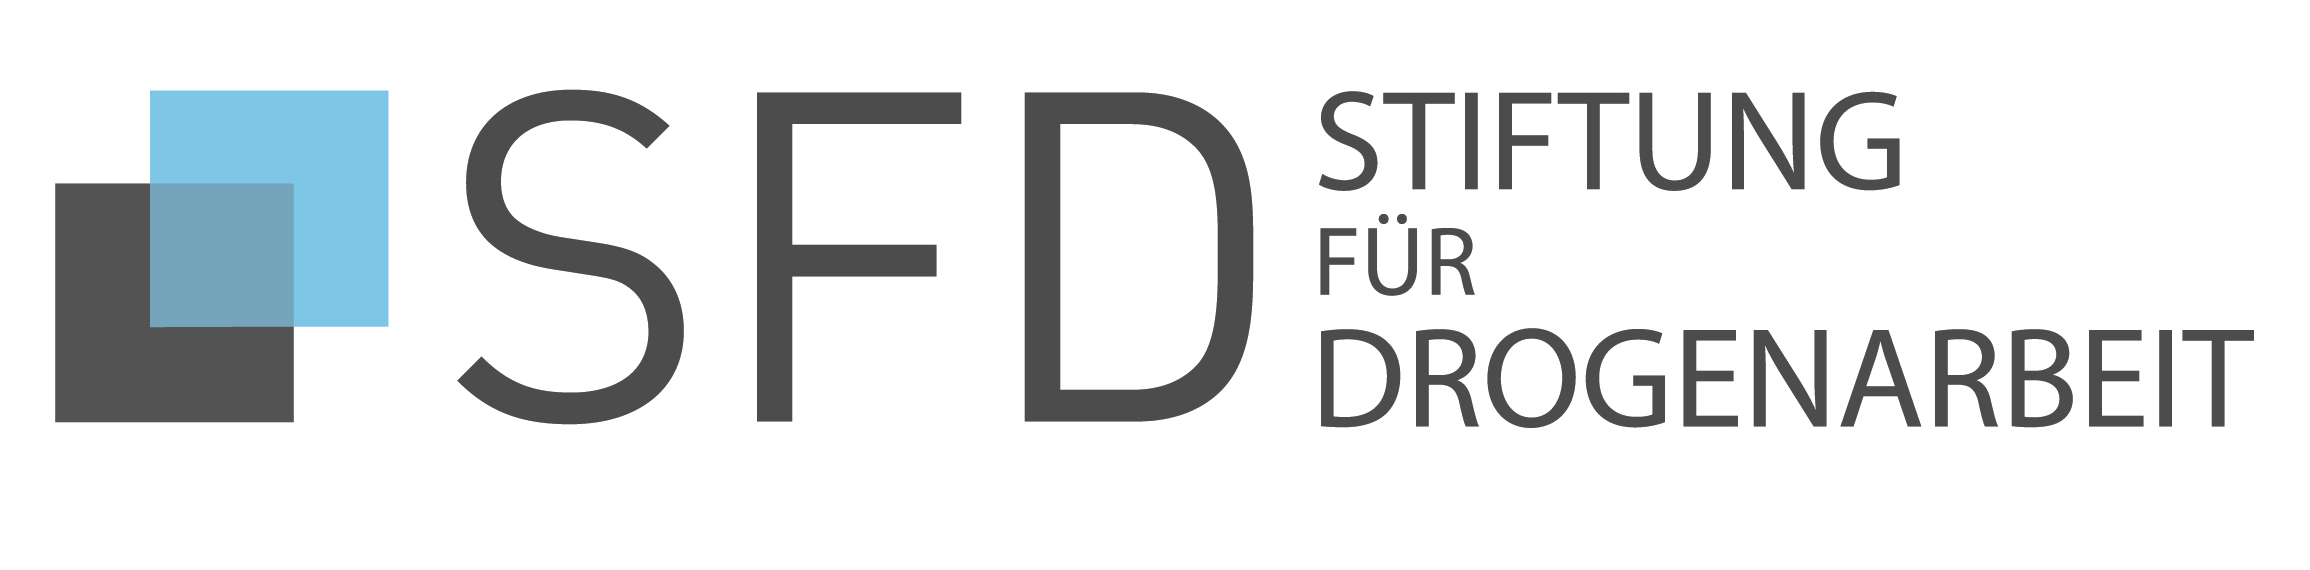 SFD Stiftung fuer Drogenarbeit